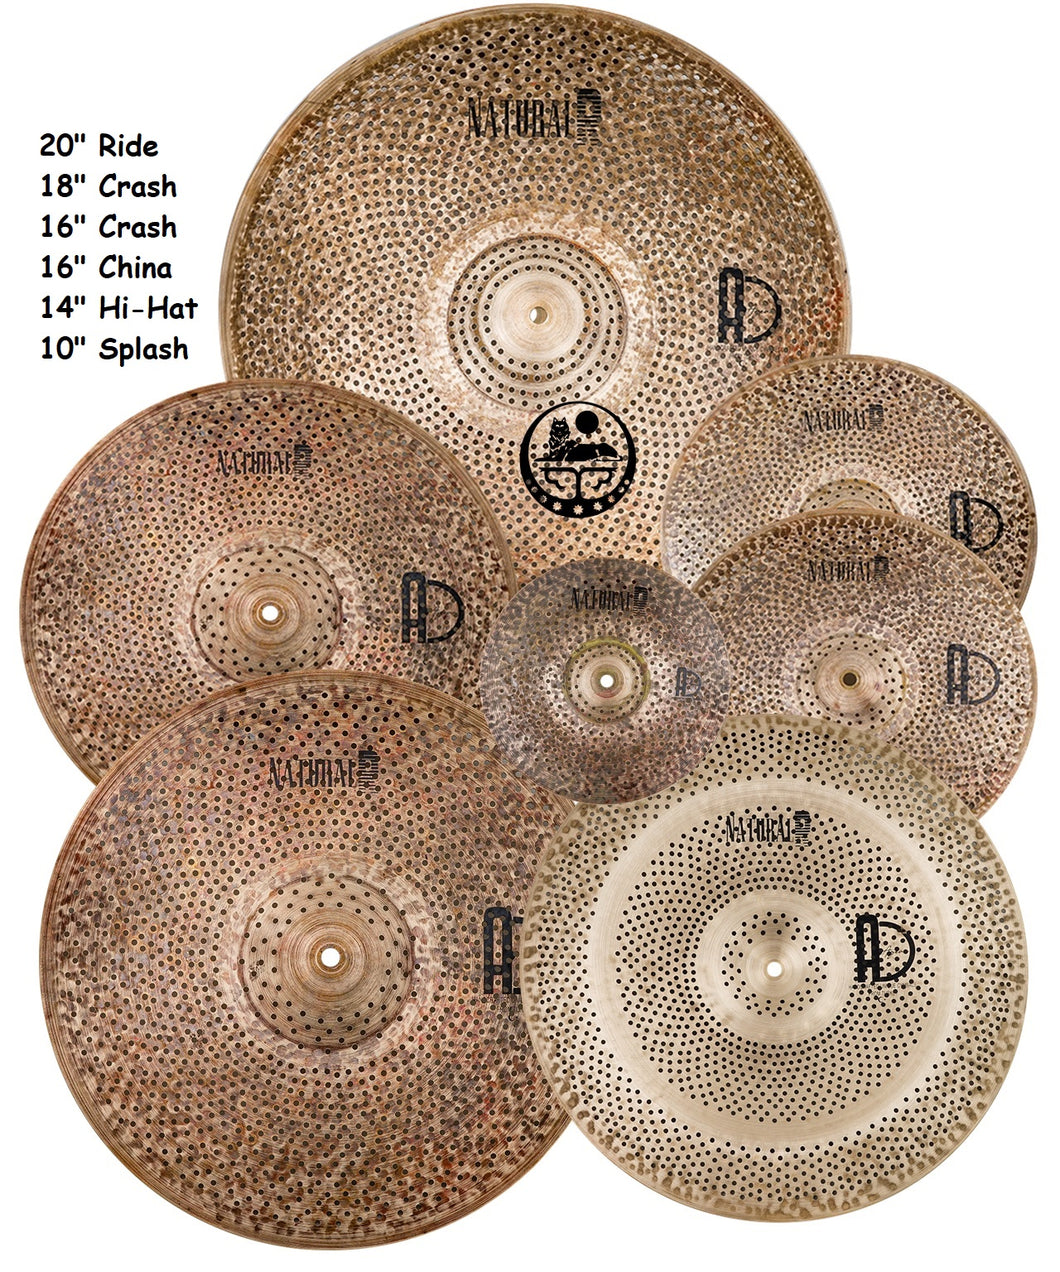 Agean Natural R-Series Low Volume Multi-1 Cymbal Pack Box Set